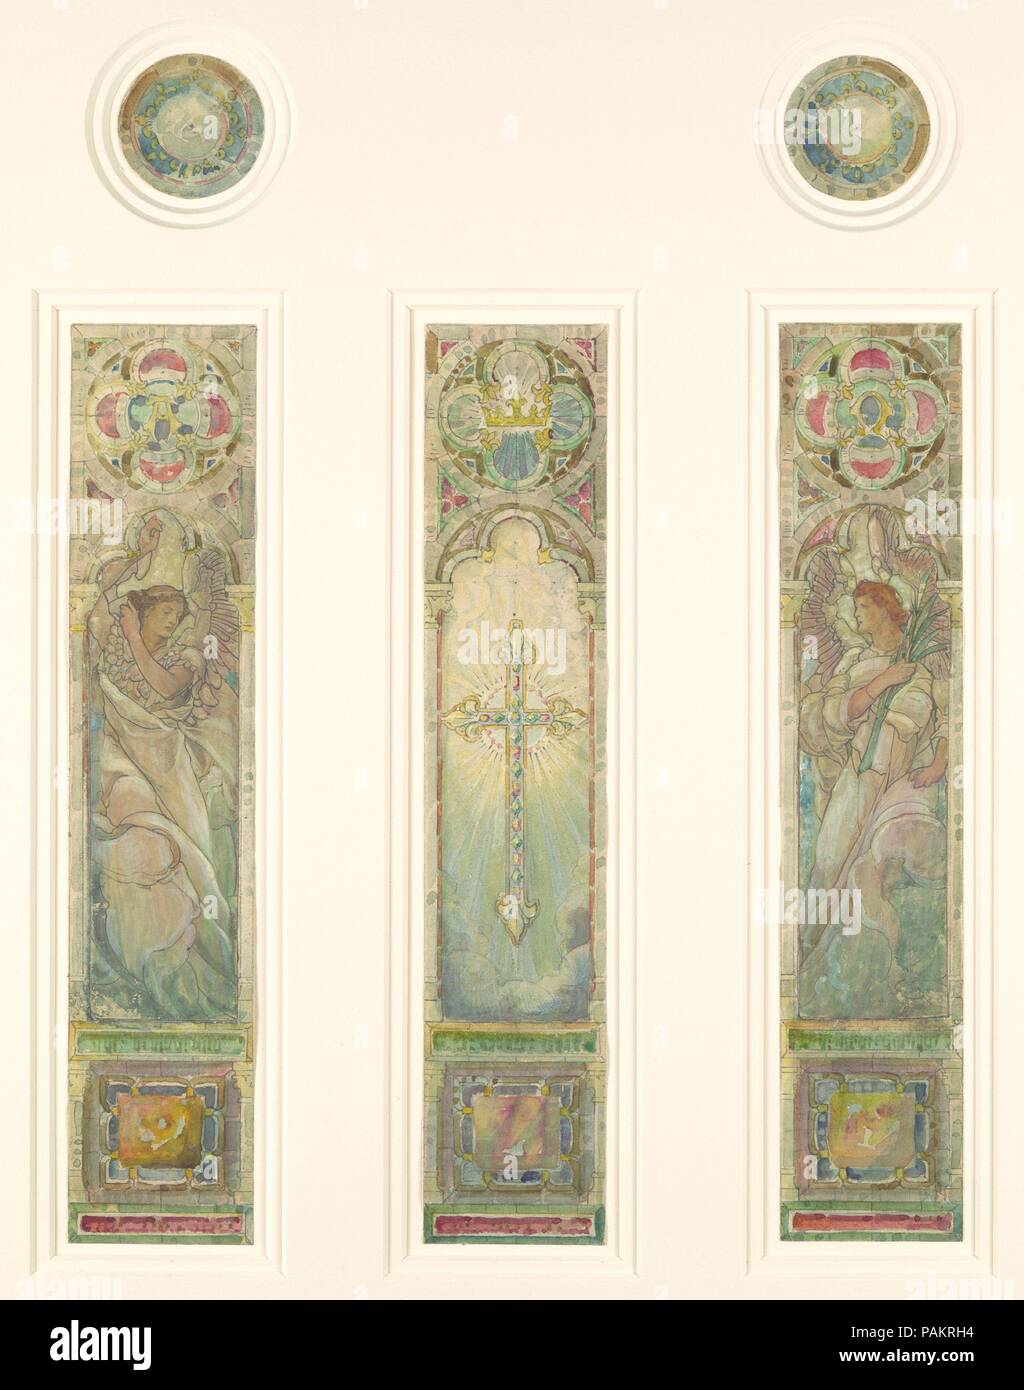 Design for triple light window. Artist: Probably Frederick Wilson (American (born Ireland) Dublin 1858-1932 Los Angeles, California). Culture: American. Dimensions: Overall: 21 x 13 3/16 in. (53.3 x 33.5 cm)  Design, rectangular window: 9 5/16 x 1 7/8 in. (23.7 x 4.7 cm)  Design, medallion: 1 1/2 in. (3.8 cm). Maker: Tiffany Studios (1902-32). Date: late 19th-early 20th century. Museum: Metropolitan Museum of Art, New York, USA. Stock Photo